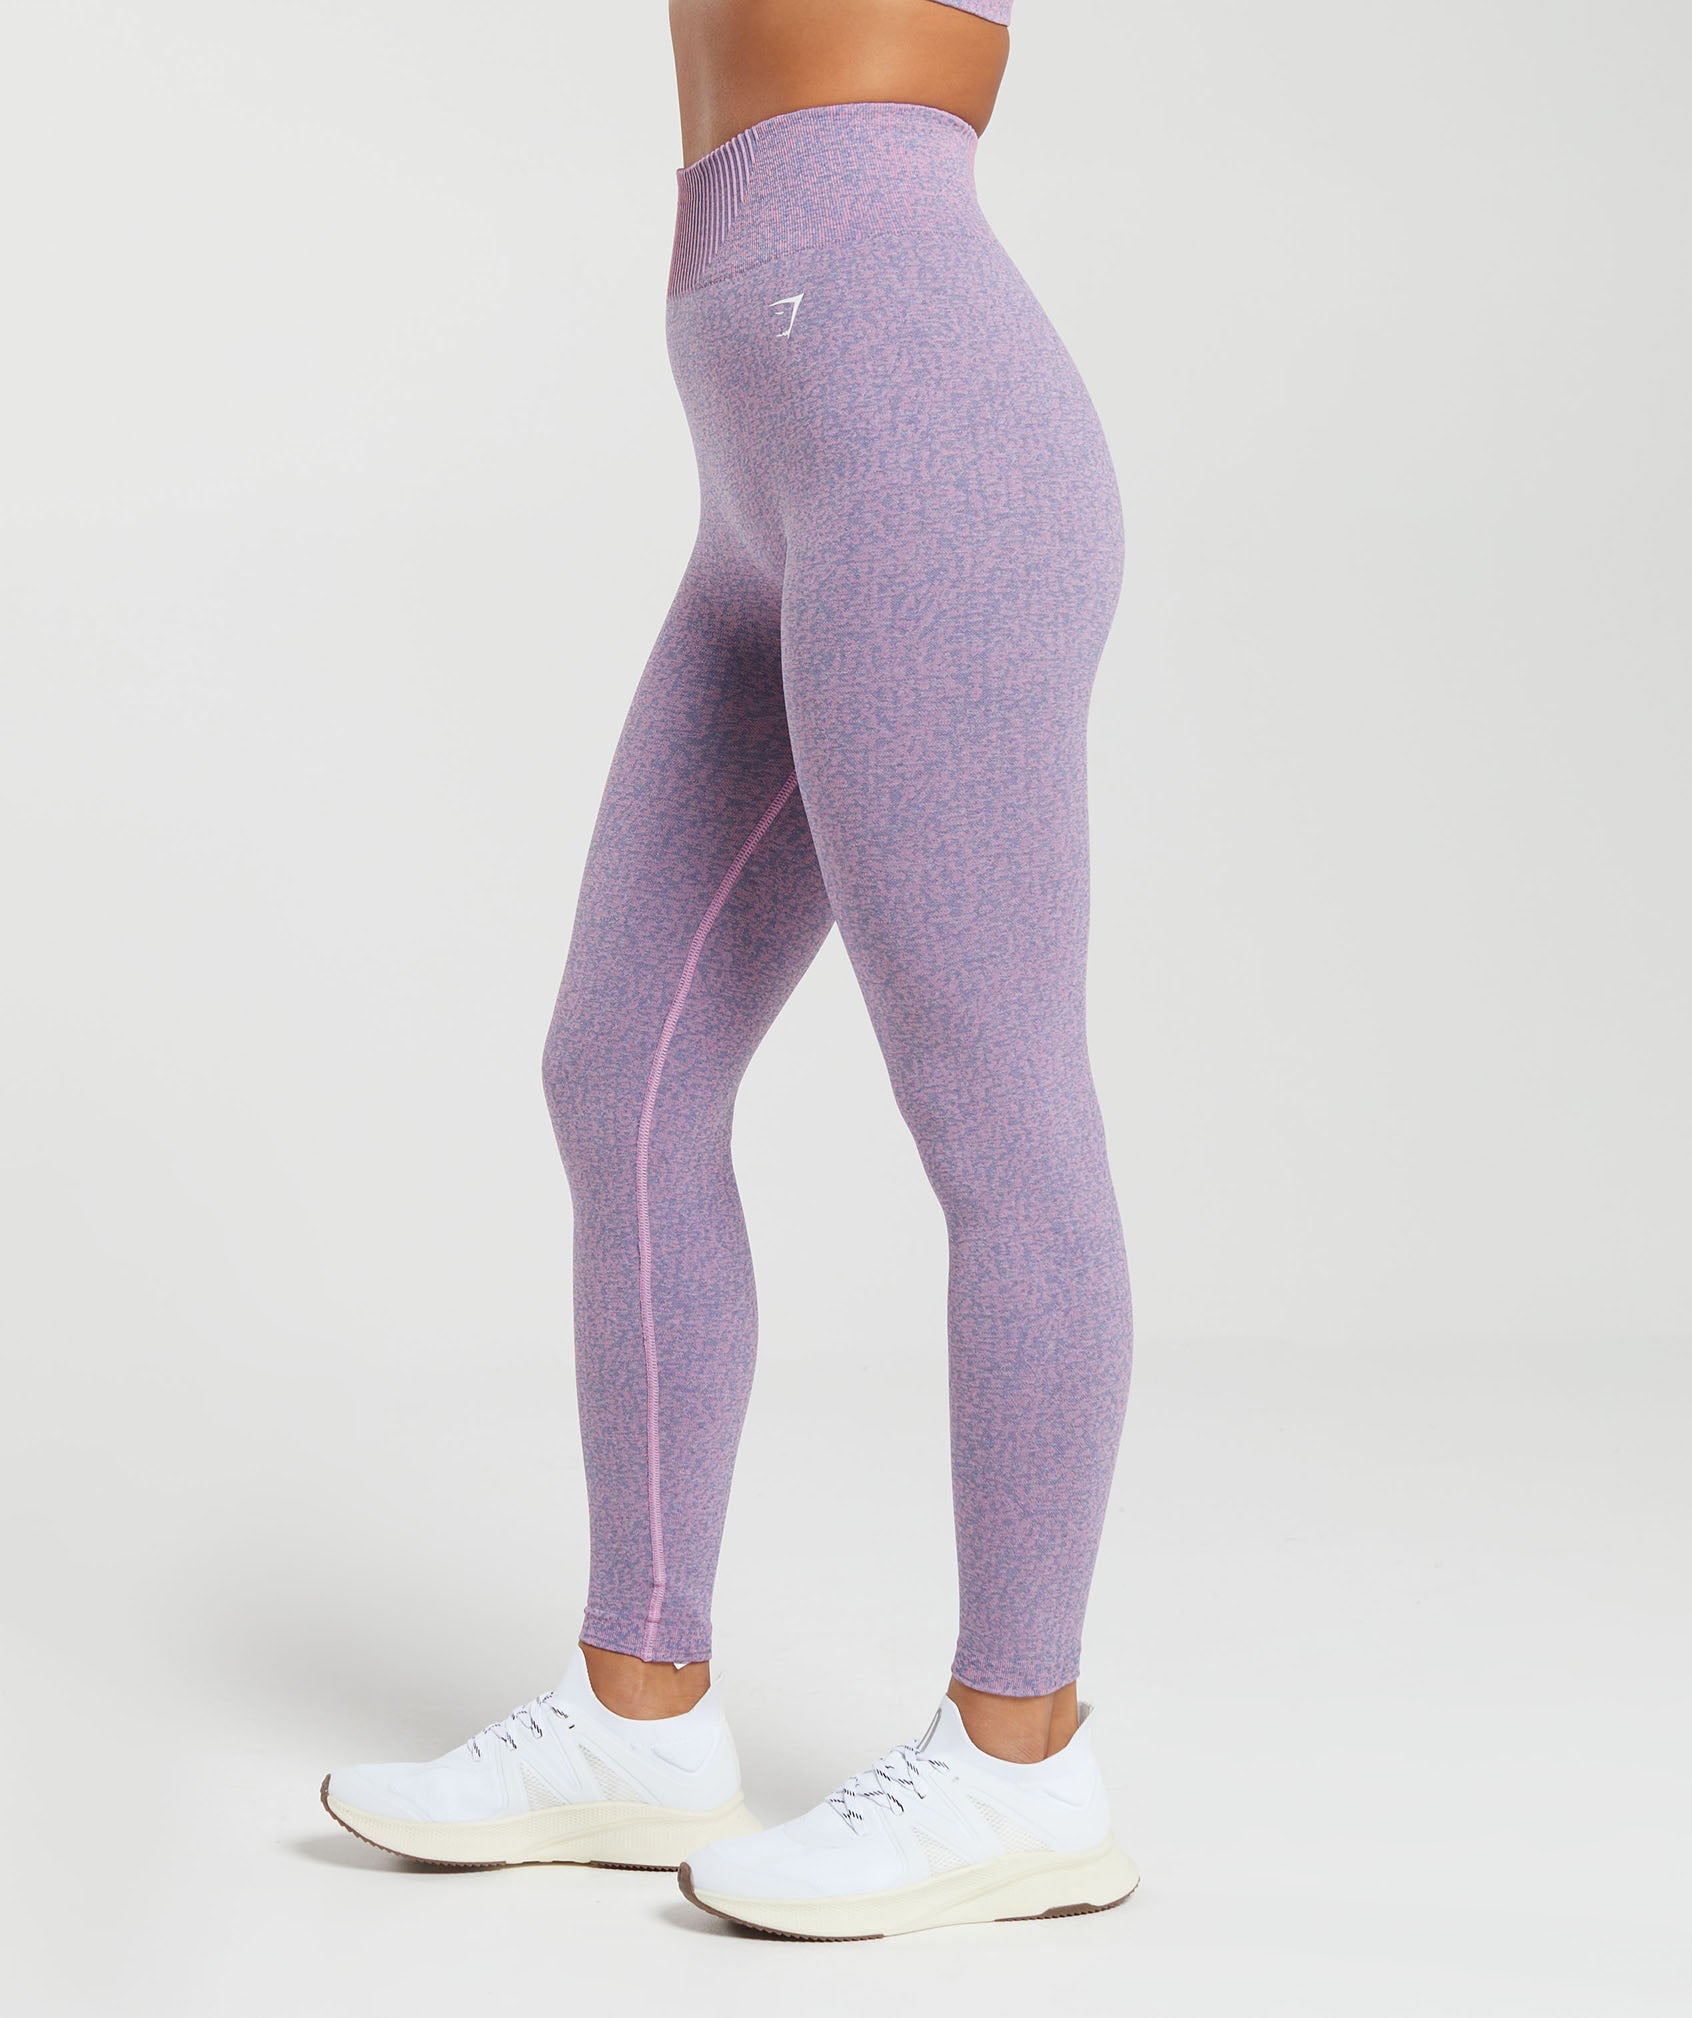 Gymshark Adapt Marl Seamless Leggings Purple - $32 (46% Off